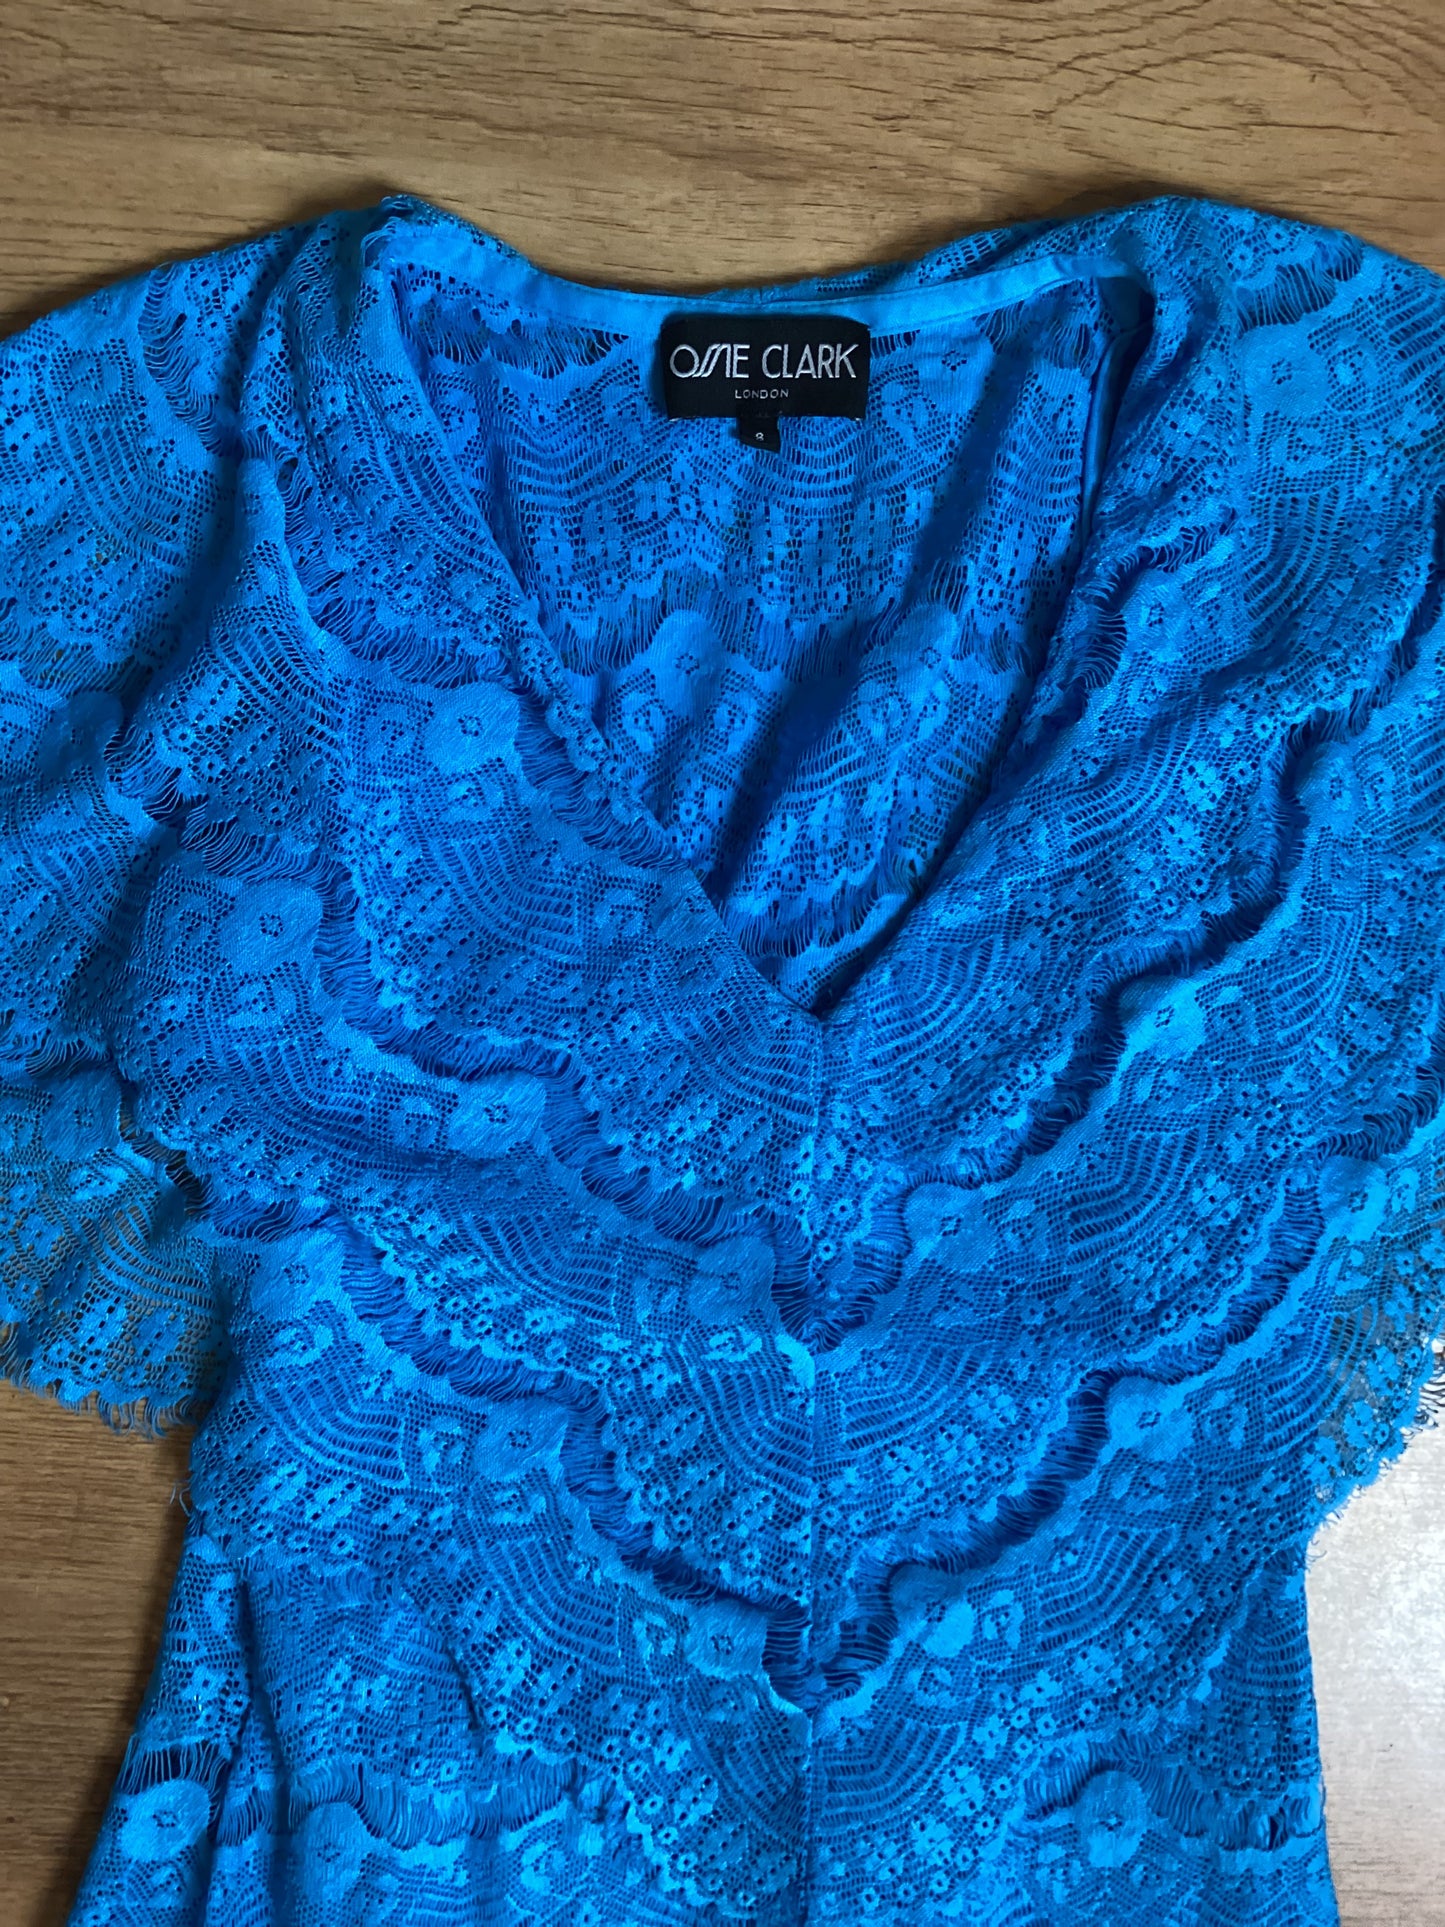 Ossie Clark Blue Lace Dress Size 8